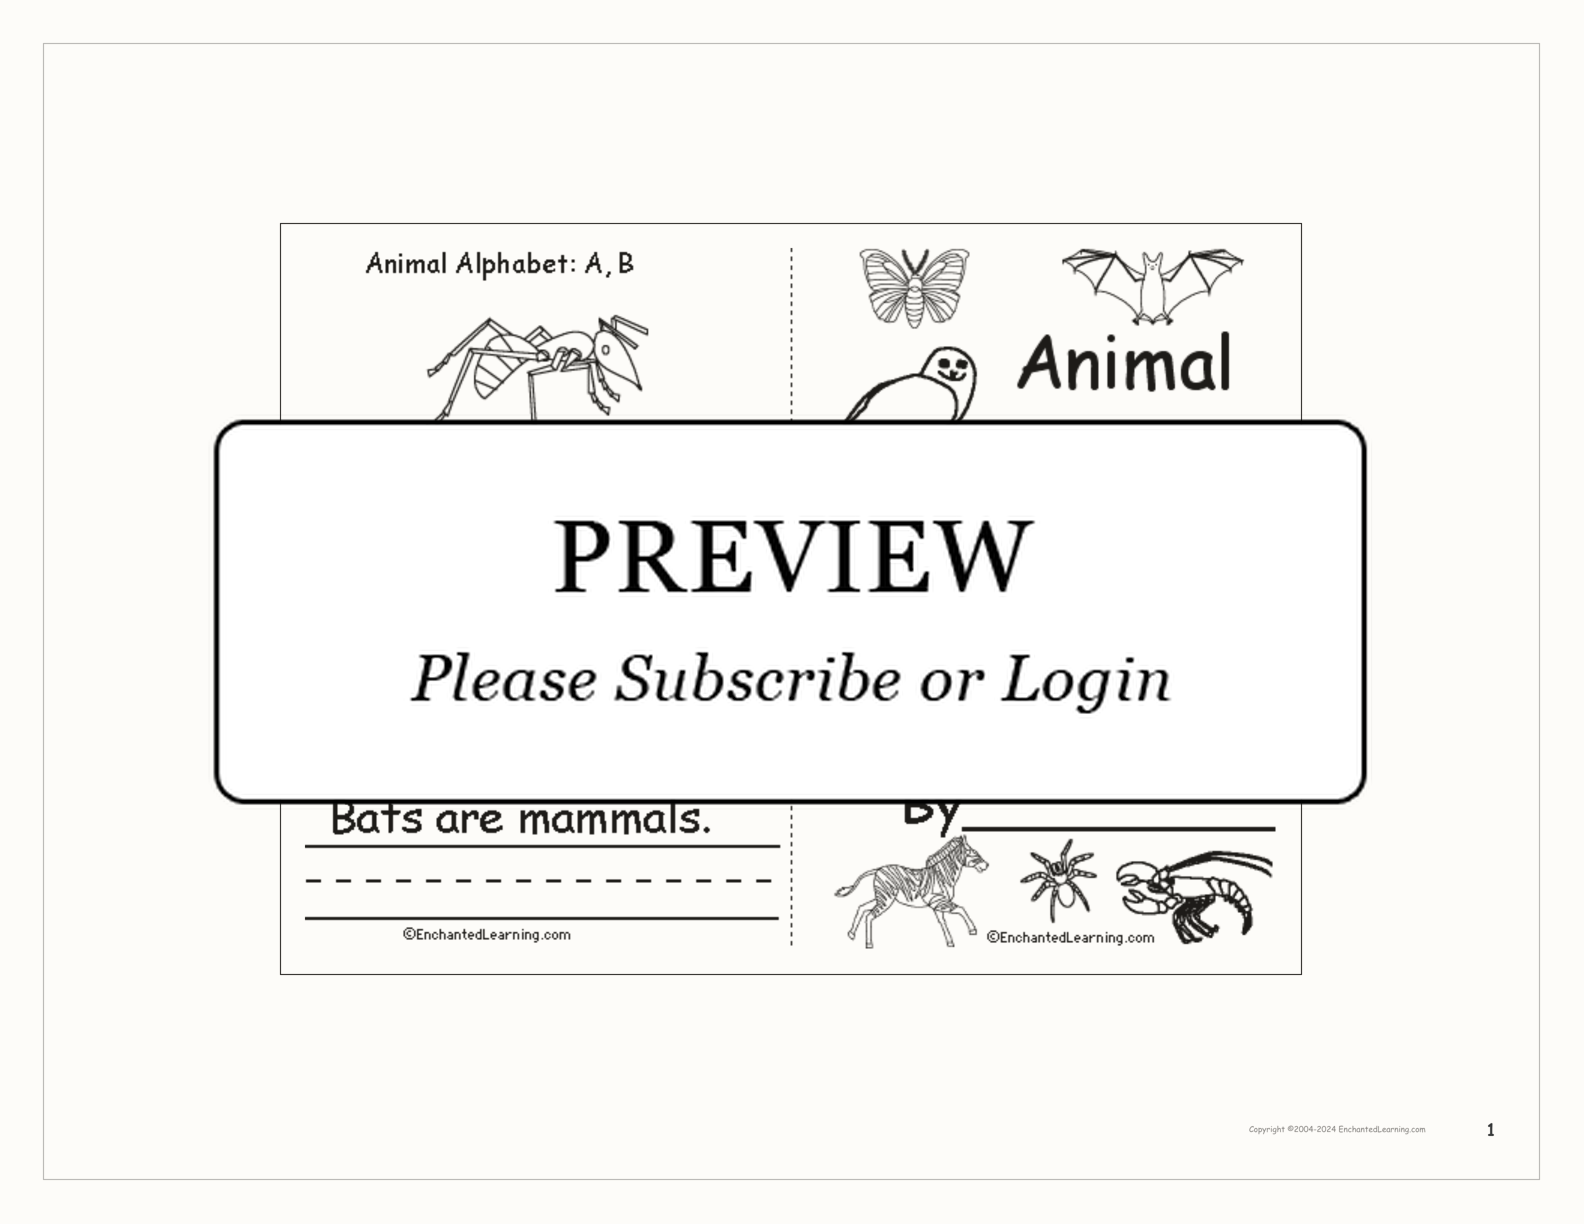 Animal Alphabet Book interactive printout page 1